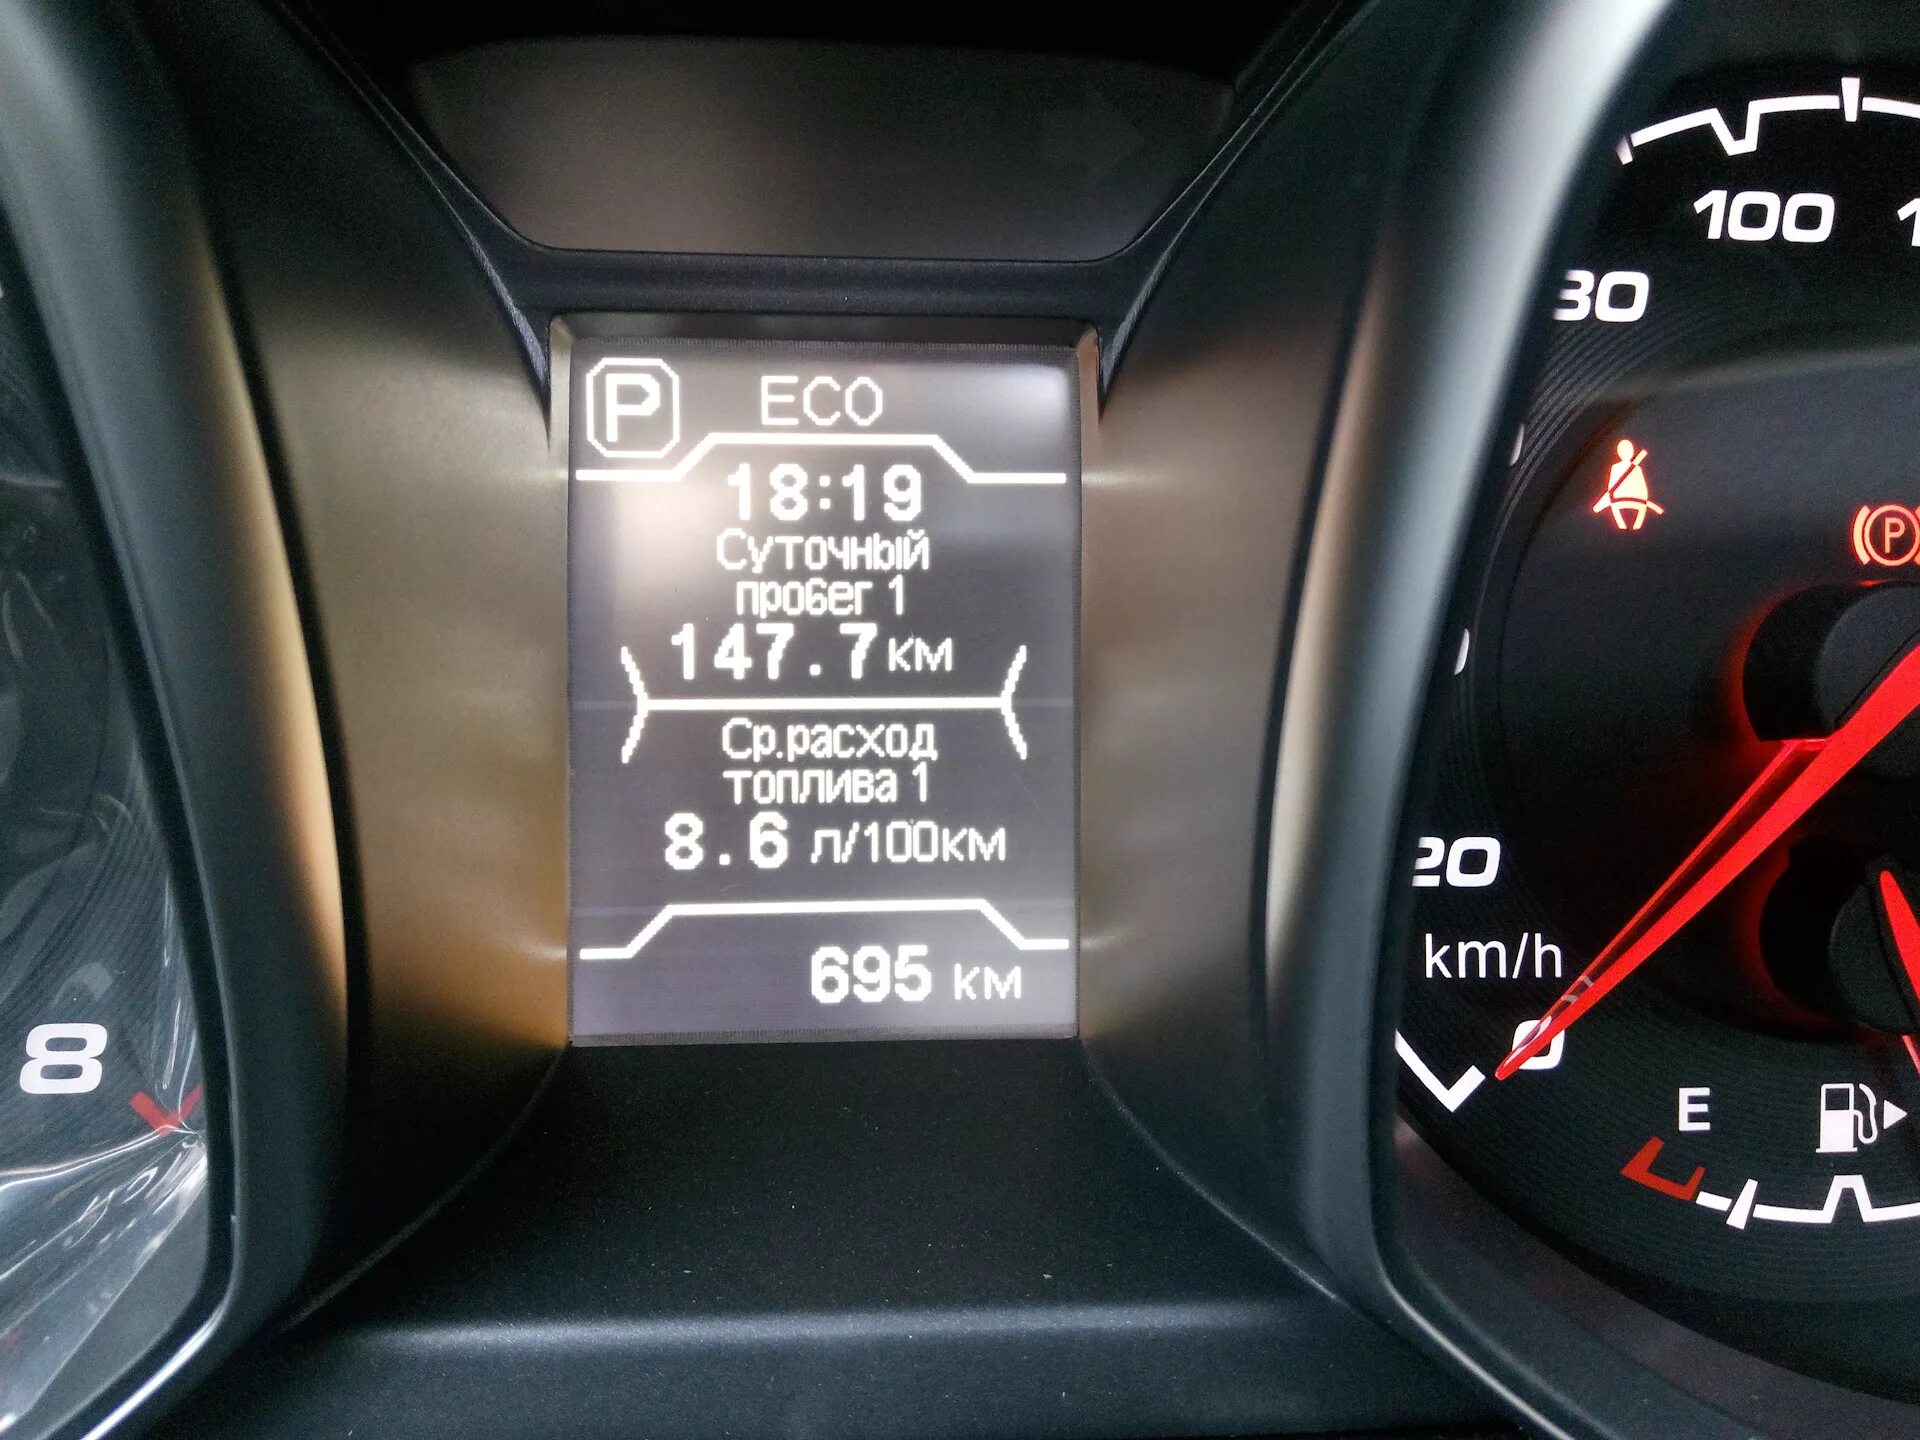 Расход топлива. Чери Тигго 8 про расход топлива. Измерение расхода топлива в автомобиле. Chery Tiggo 8 расходы топлива.